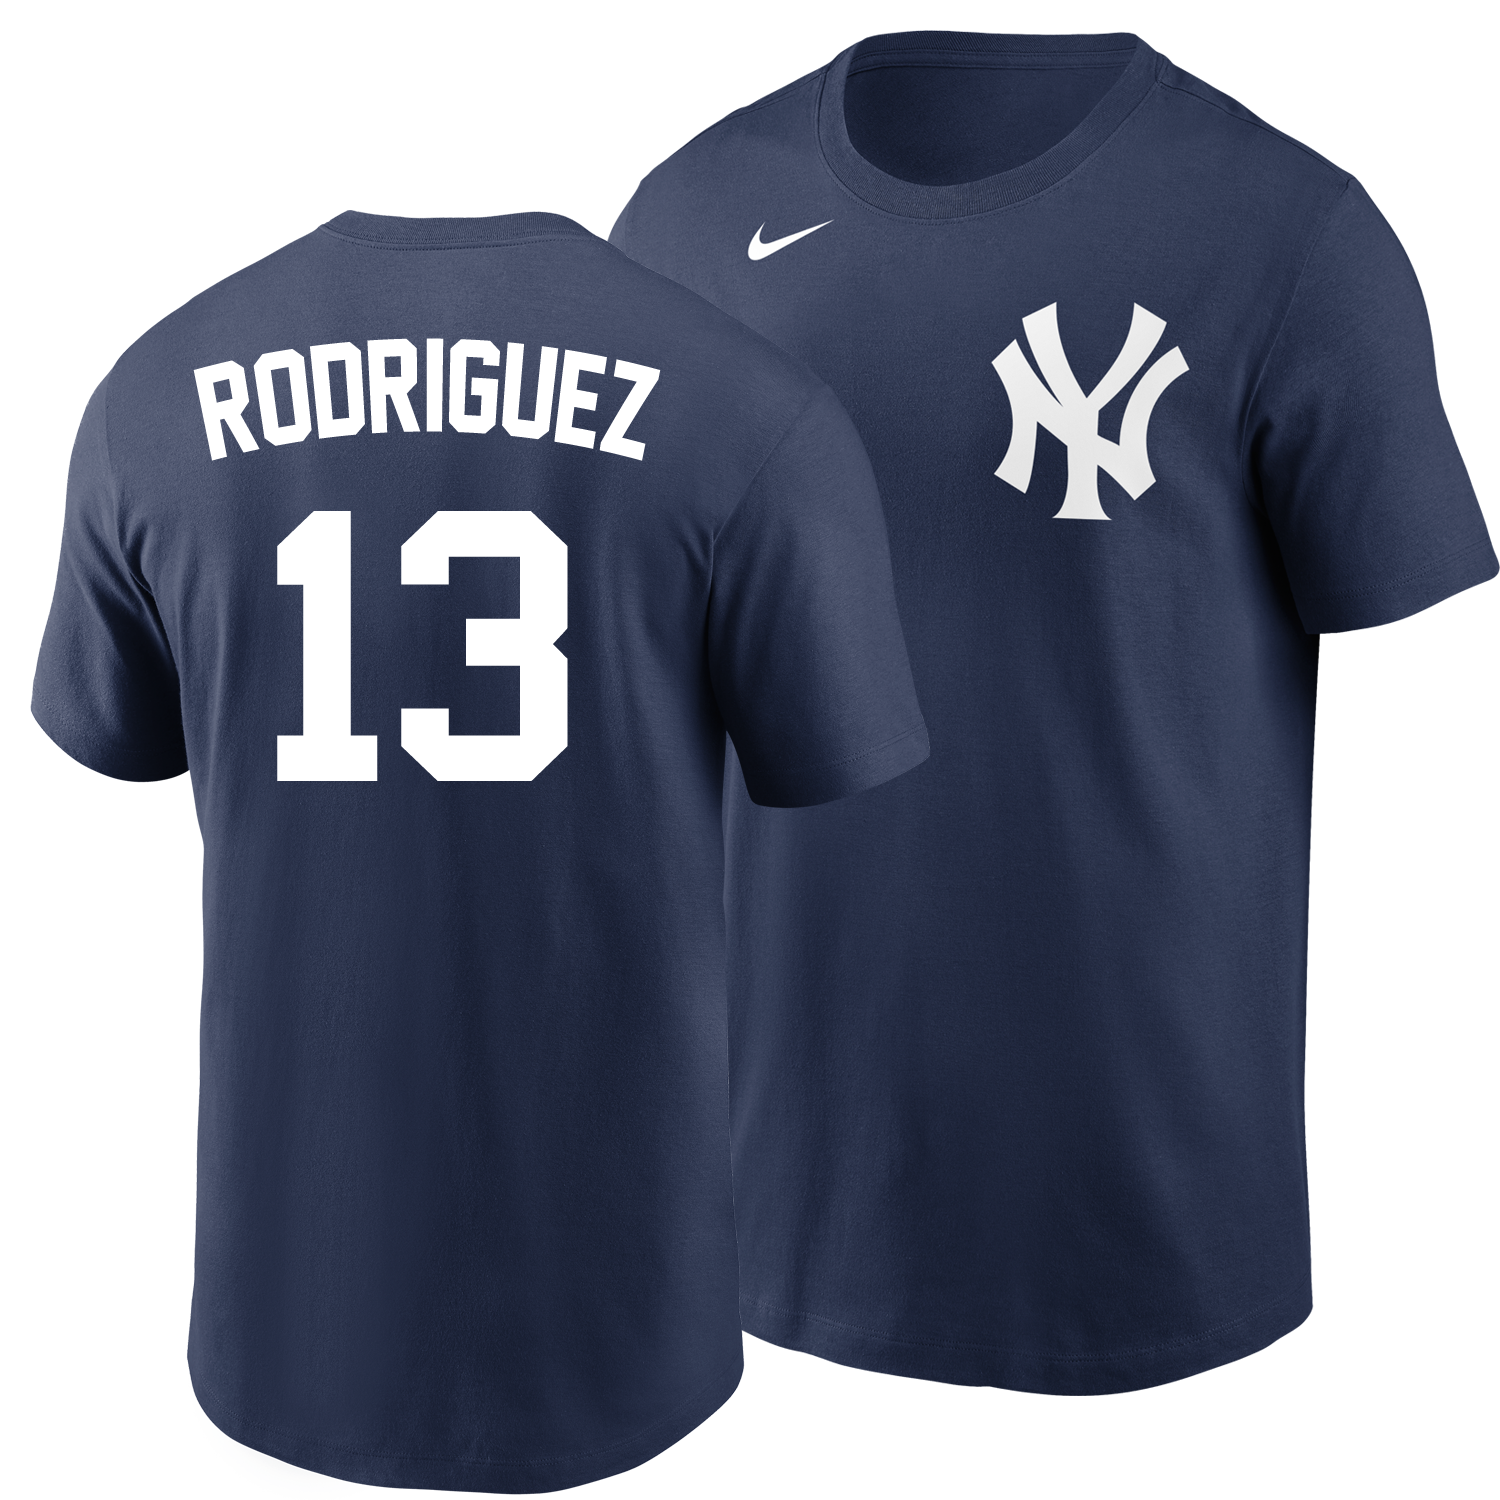 Men's New York Yankees Nike Alex Rodriguez Road Jersey